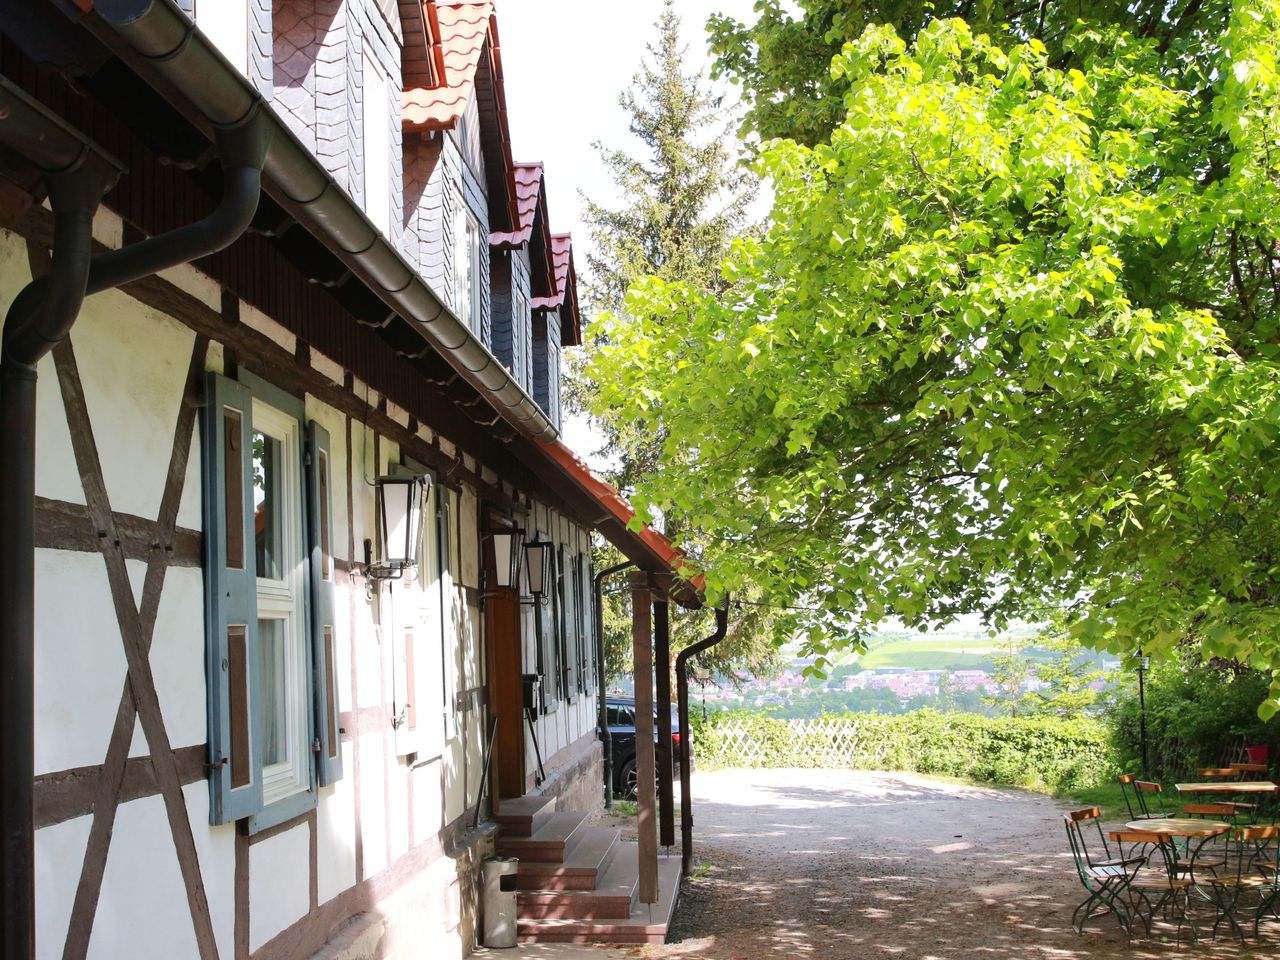 7 Nächte E Bike im Tiny House in Mitteldeutschland